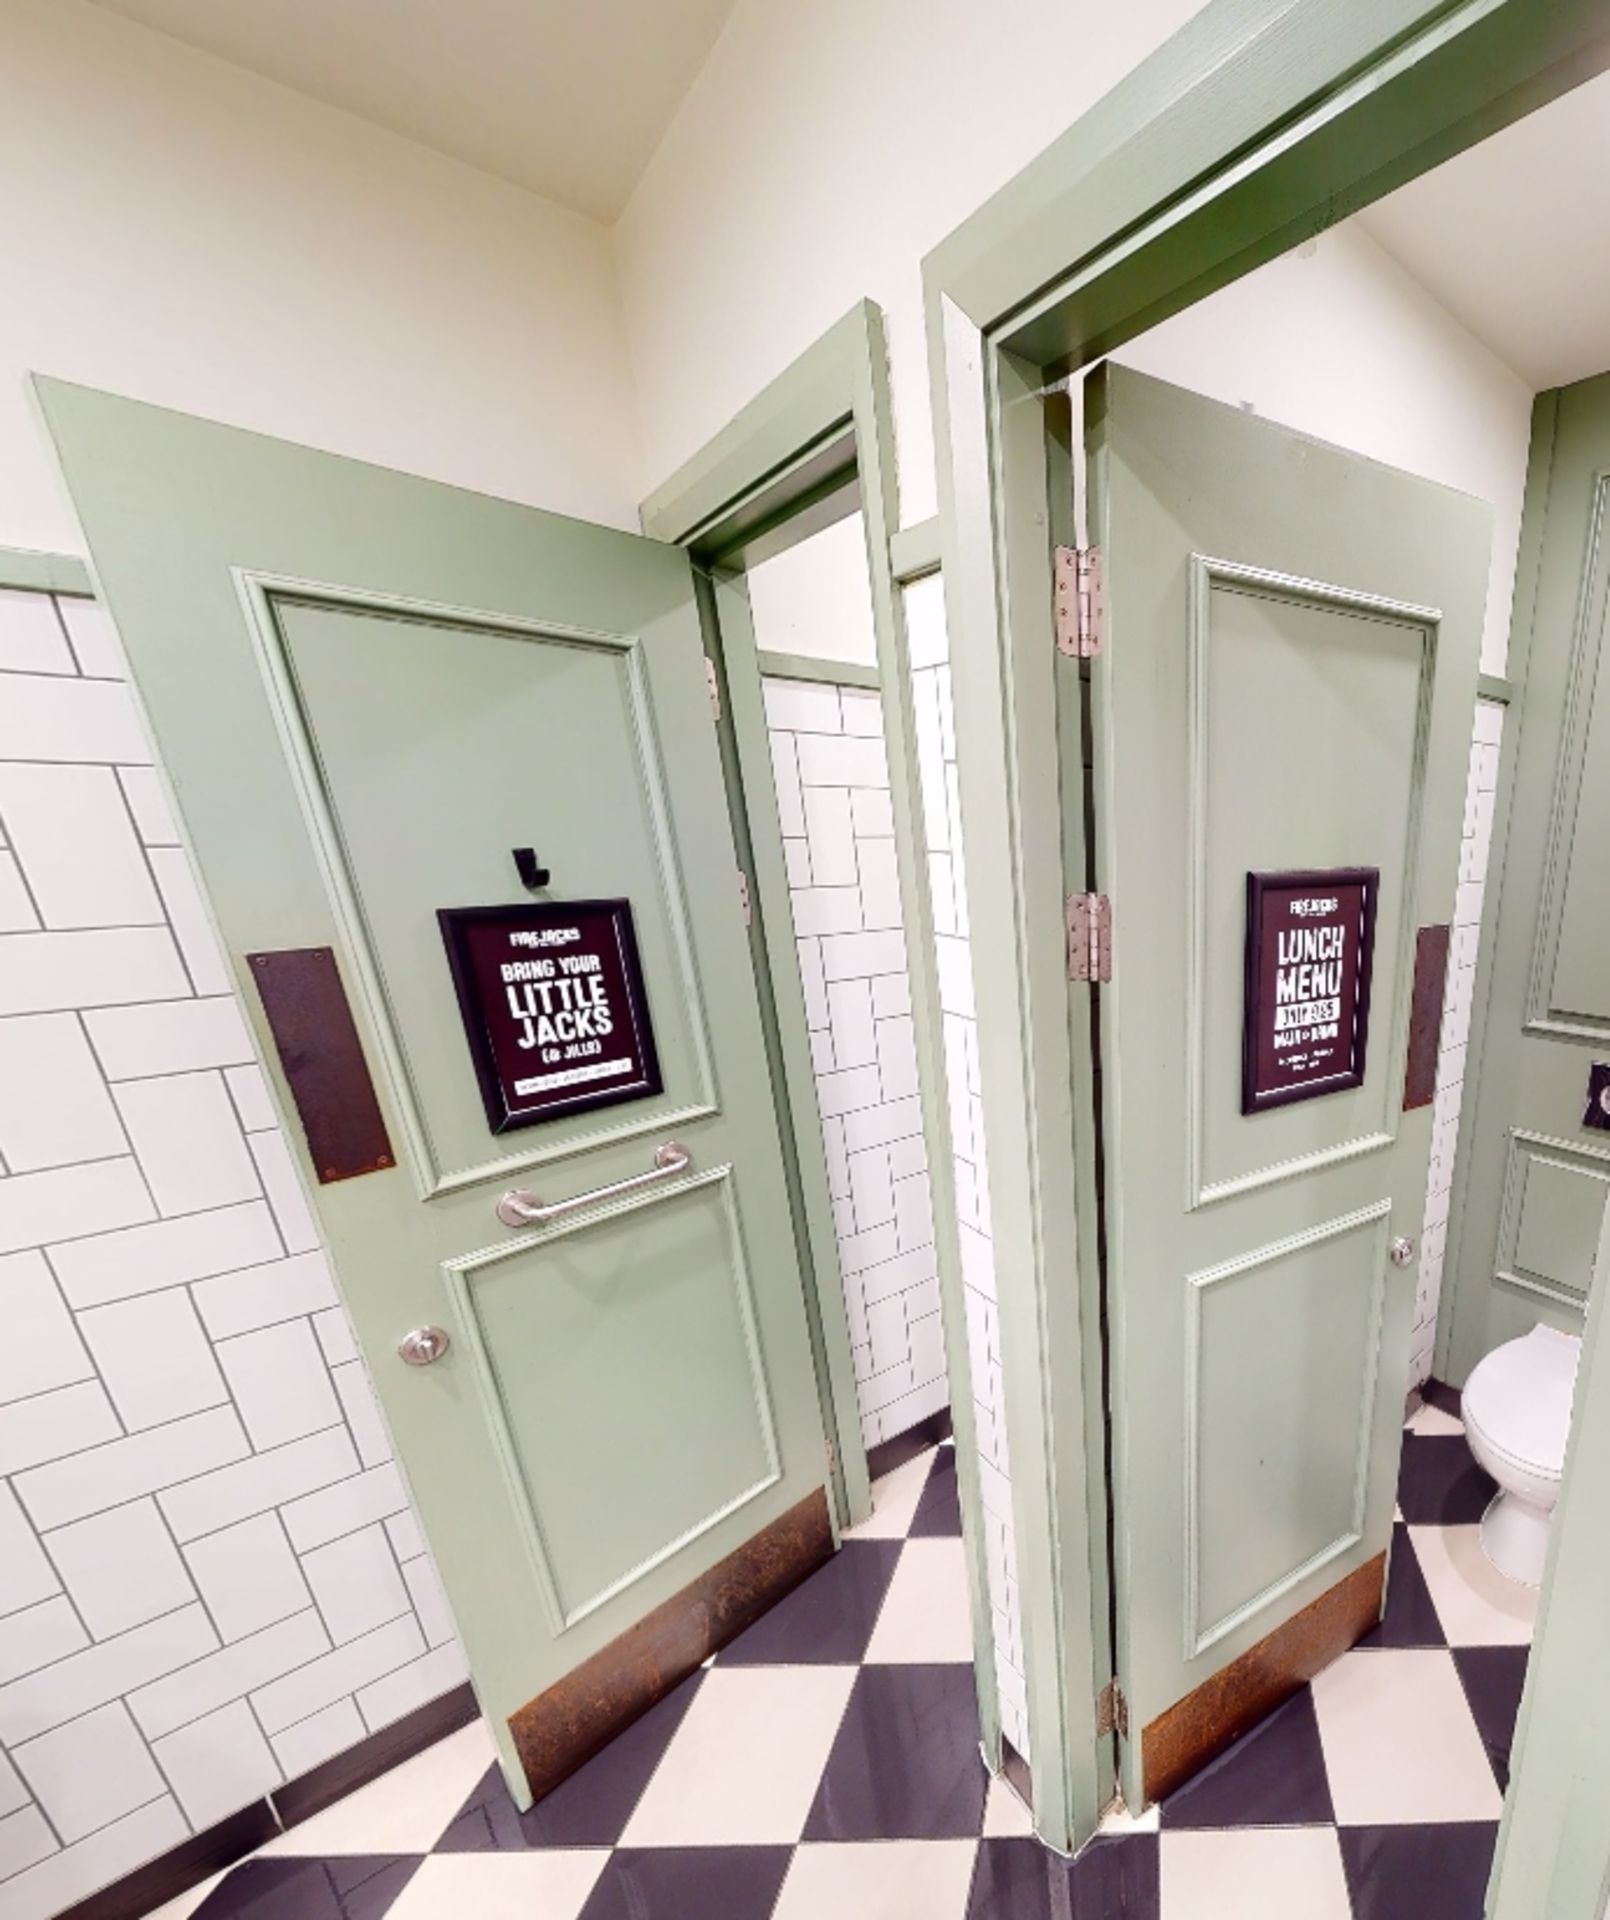 5 x Internal Toilet Cubicle Doors in Pistachio Green - Includes Locks, Hinges, Kick Plates & Handles - Image 3 of 3